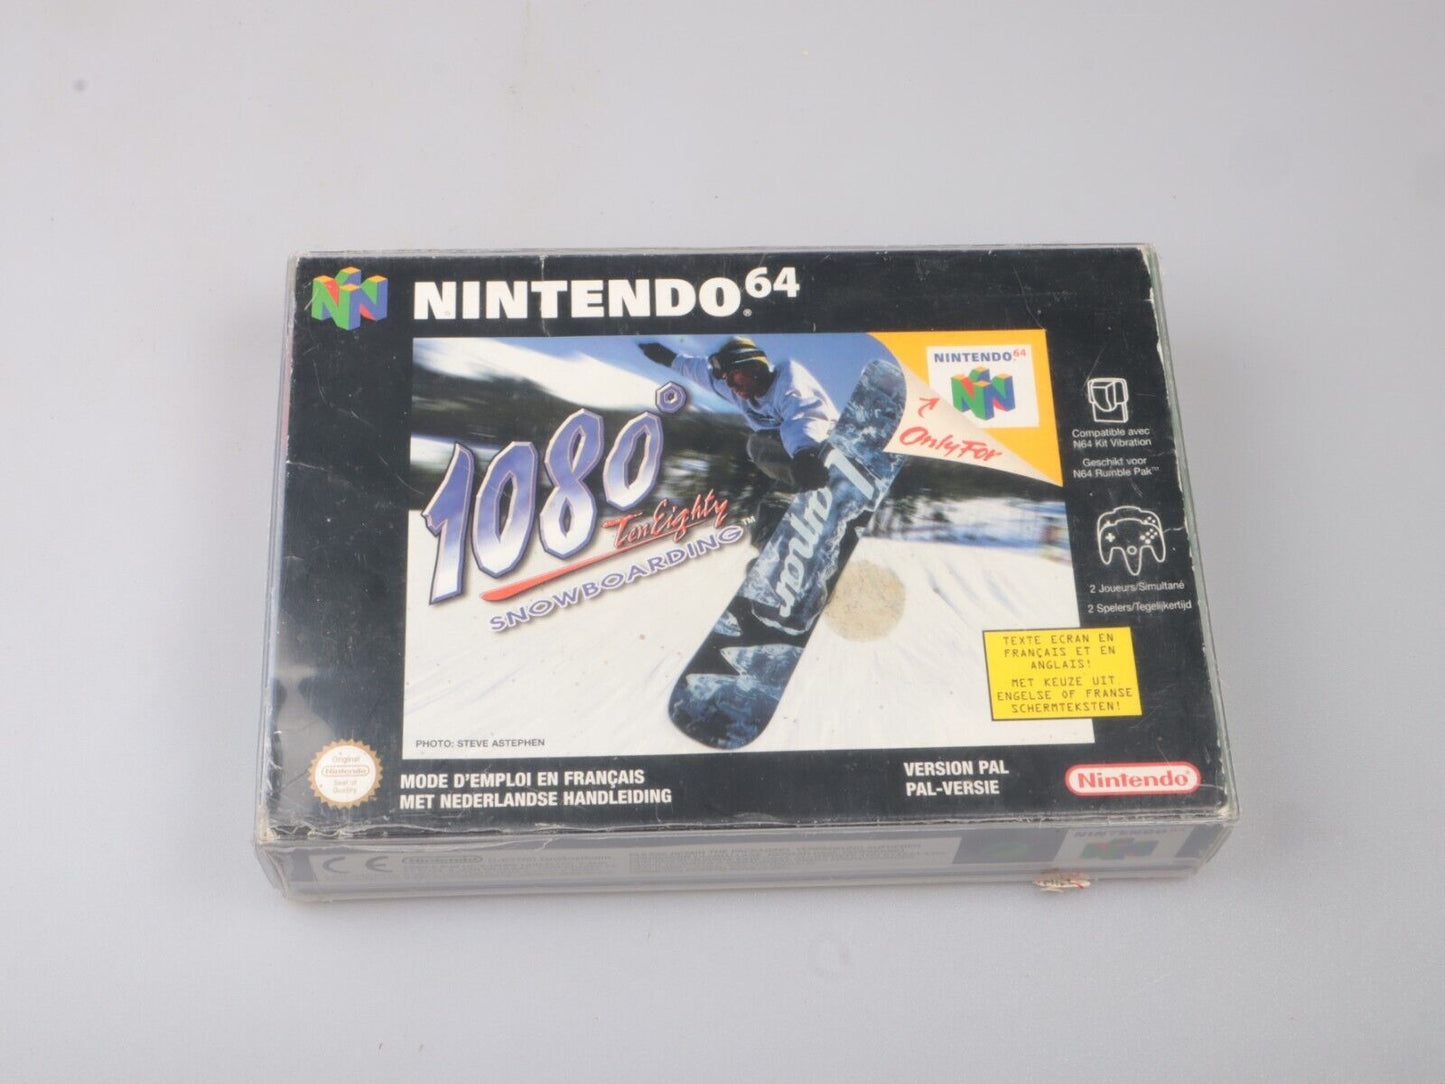 N64 | 1080° Zaaien | Nintendo 64 